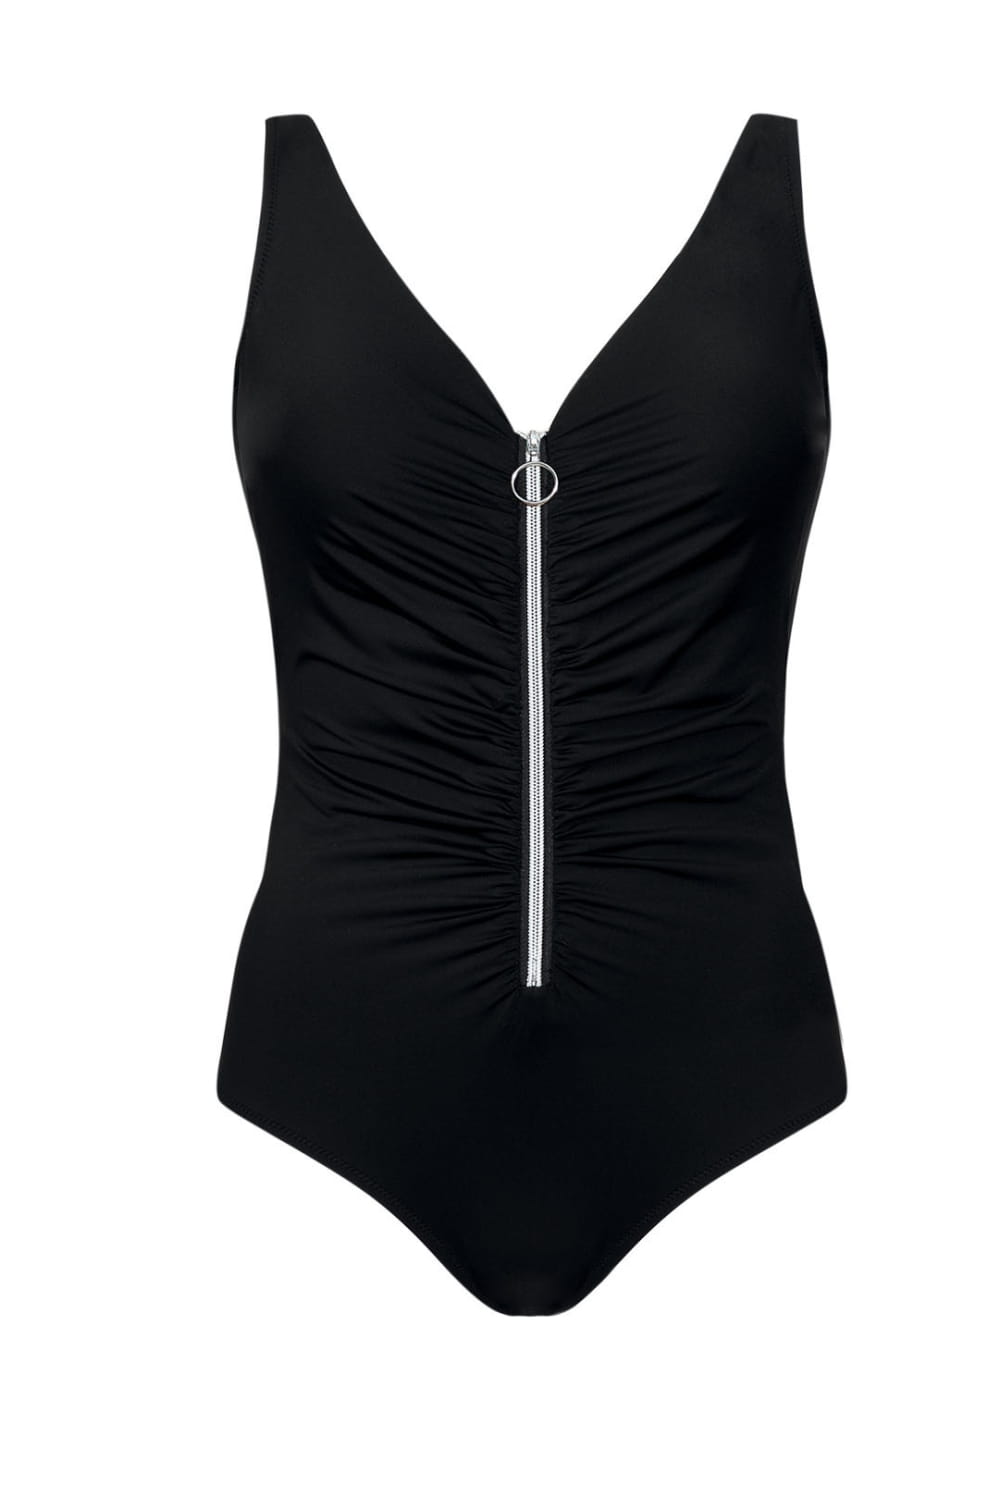 Axami Luxury Swimwear F33B Zipper Front One Piece Swimsuit Black